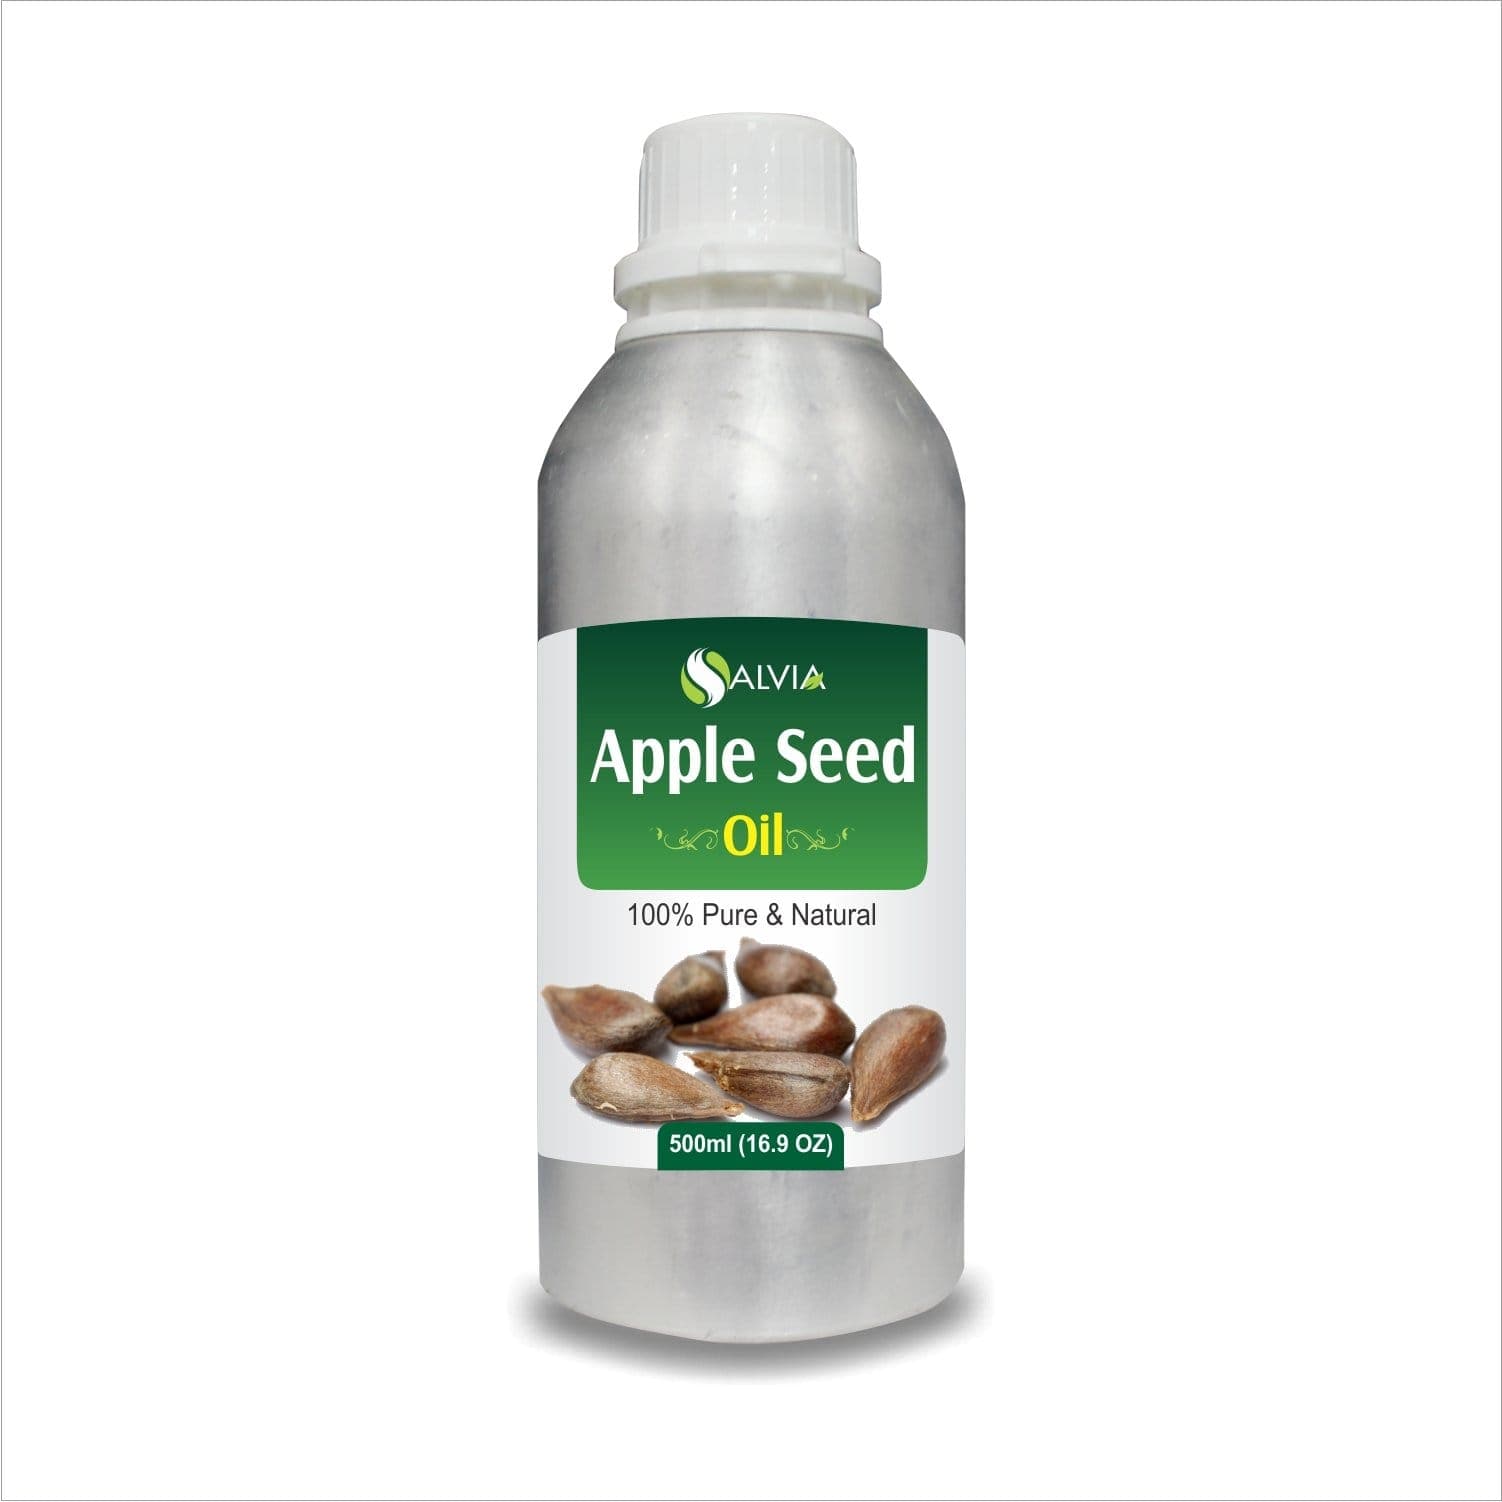 apple seed oil skin benefits